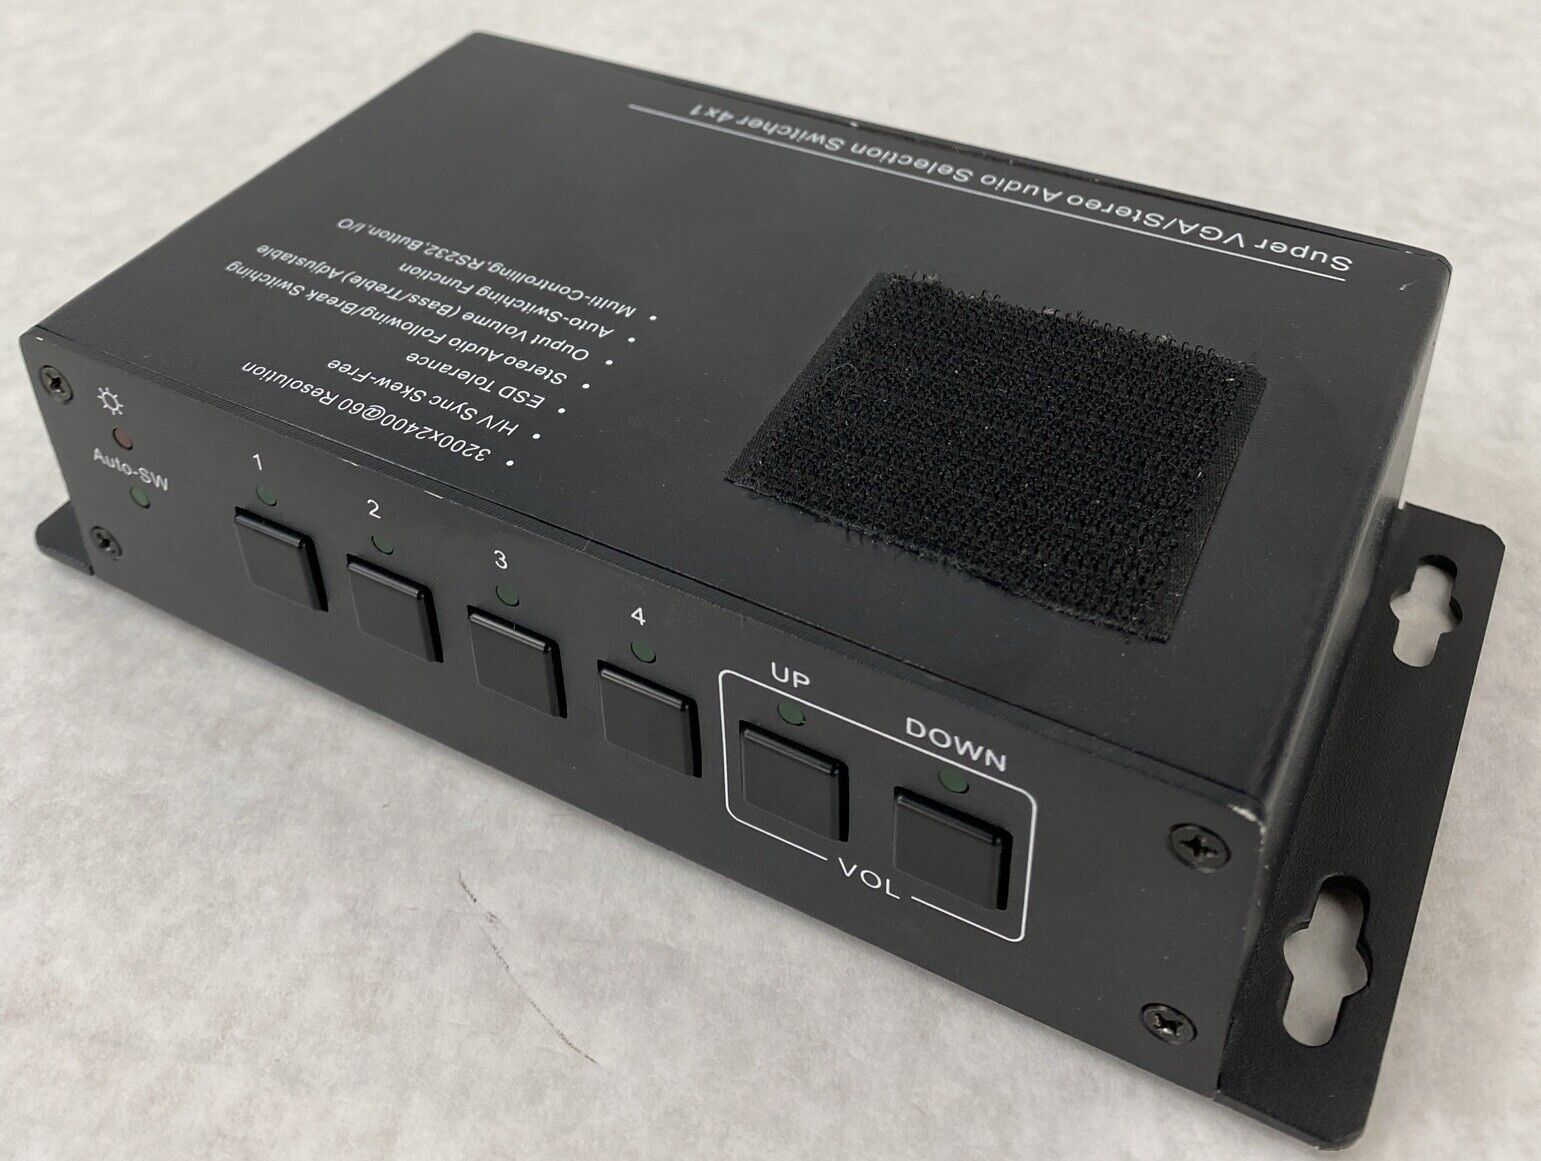 Aurora AS-41V R2 4 x 1 Super VGA Stereo Audio Selection Switcher NO PSU